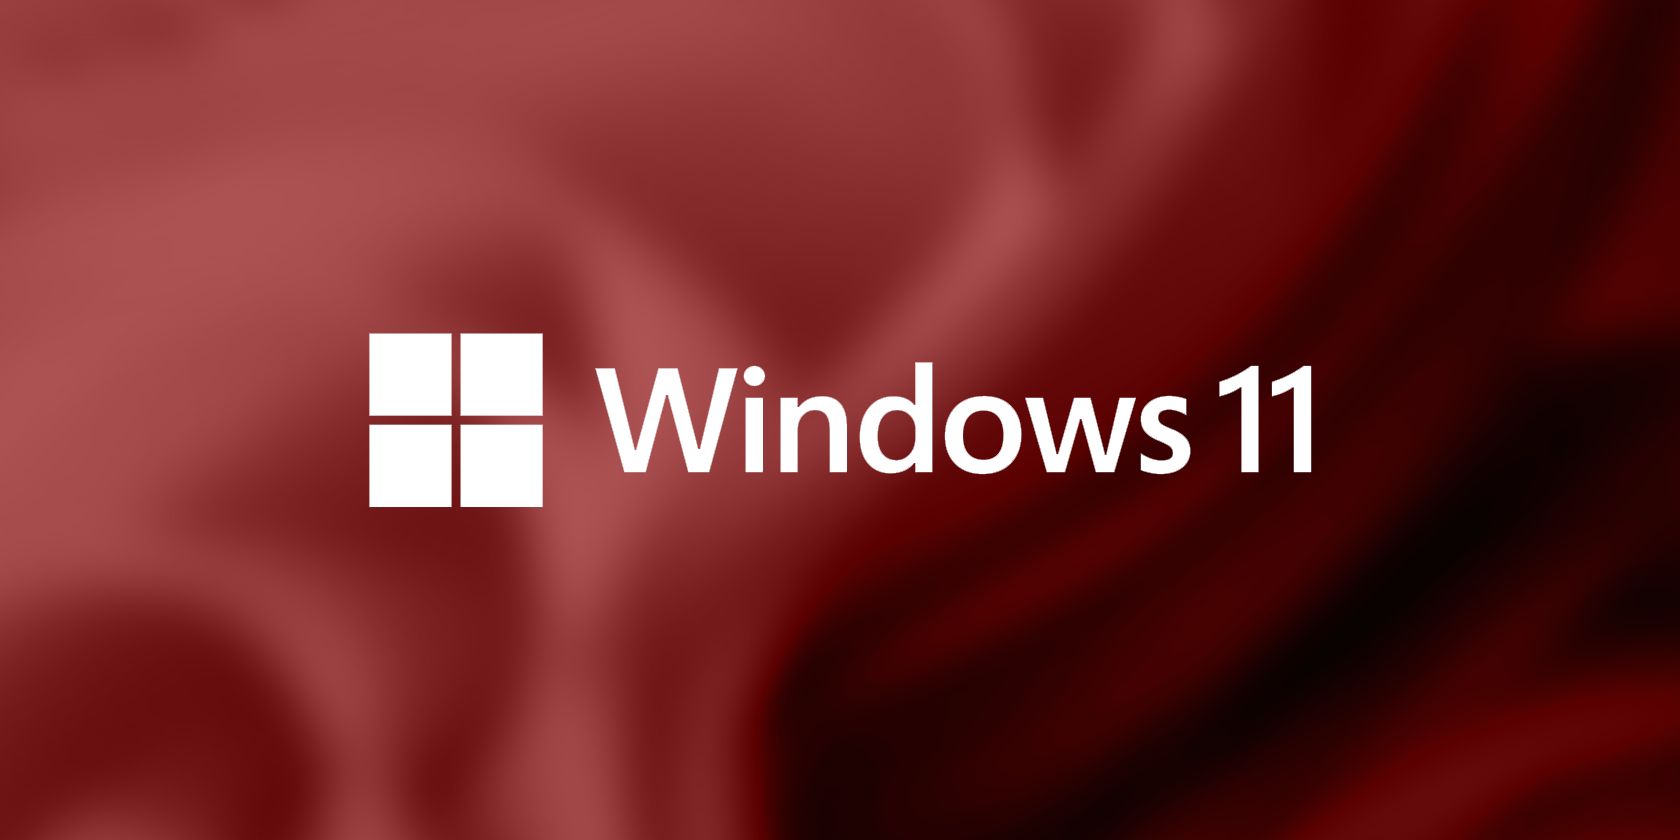 The Windows 11 logo